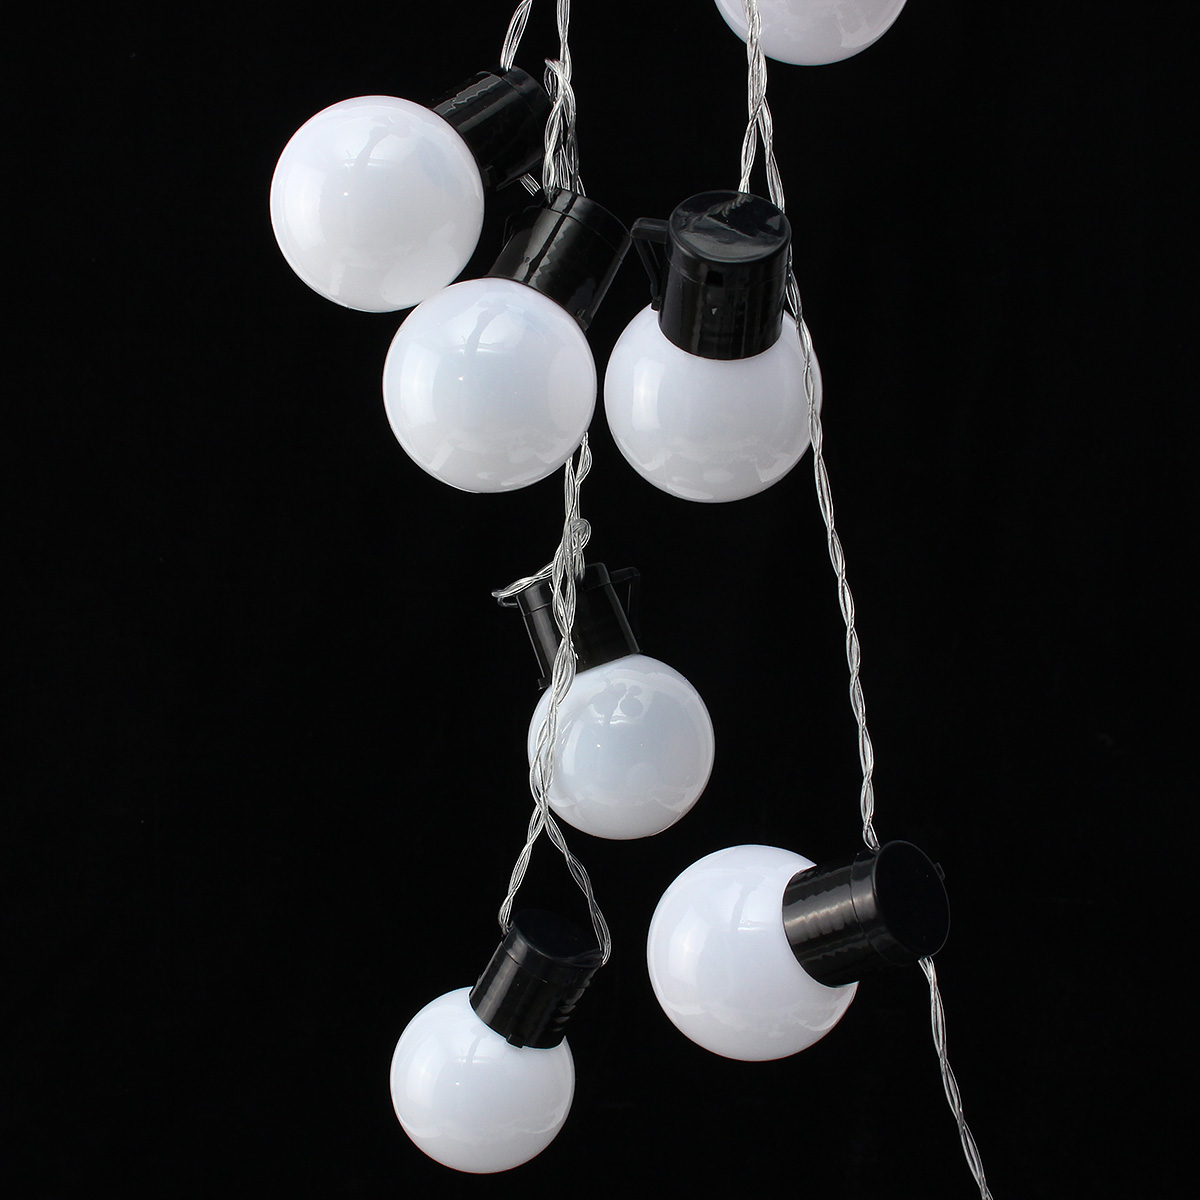 10m-38-Balls-LED-String-Fairy-Lights-Party-Xmas-Wedding-Holiday-Lamp-220V-EU-Plug-1094505-4